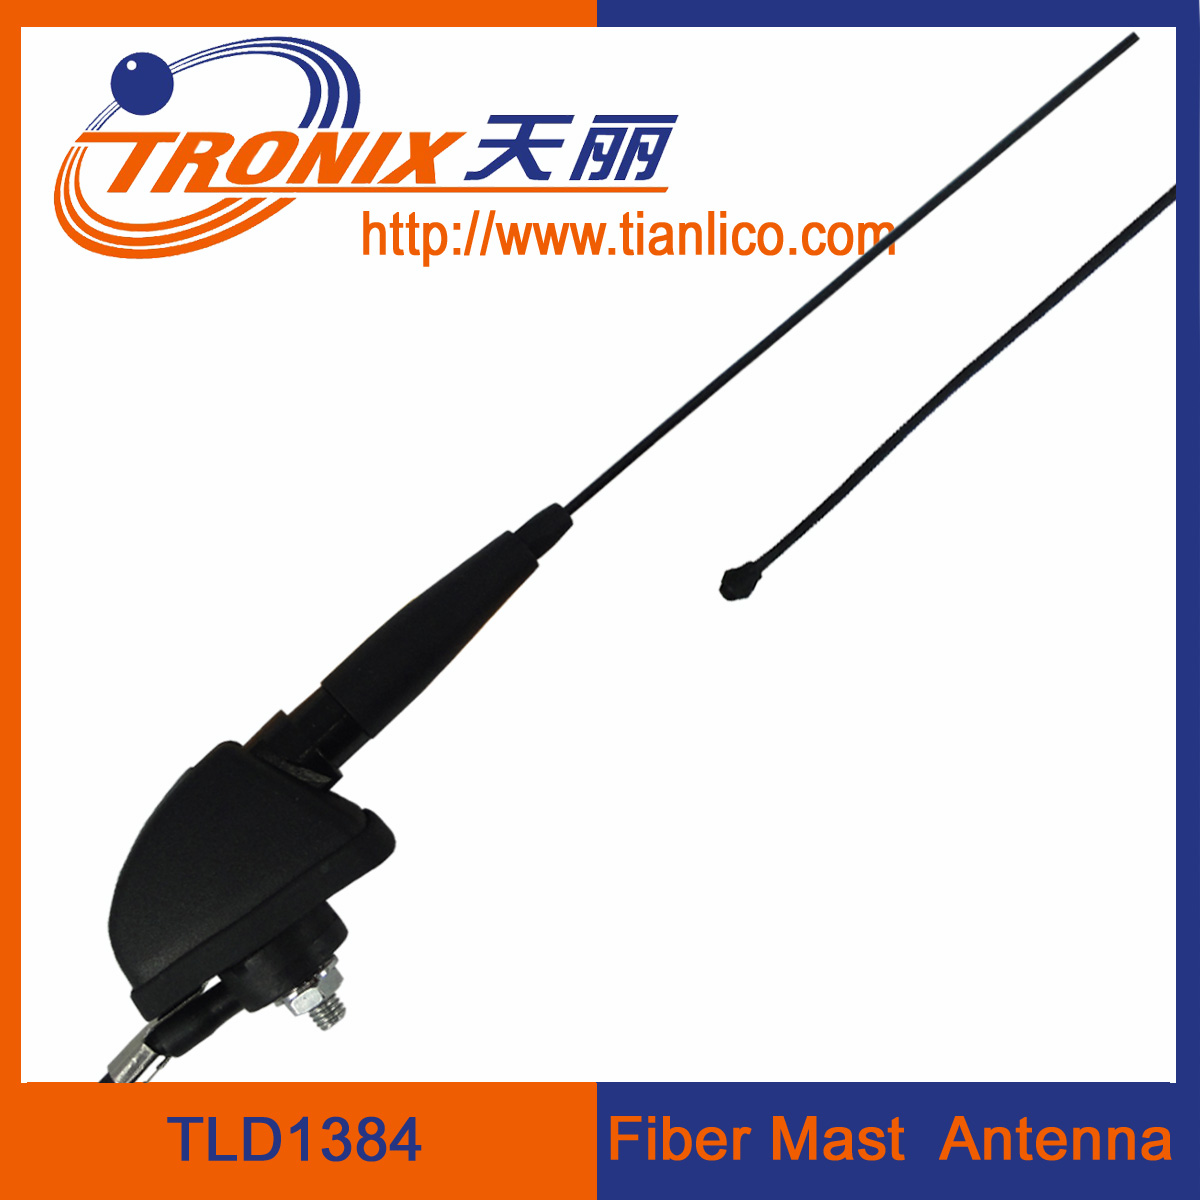 Cheap 2.0m fiber mast car antenna/ 1 section mast am fm radio car antenna TLD1384 for sale